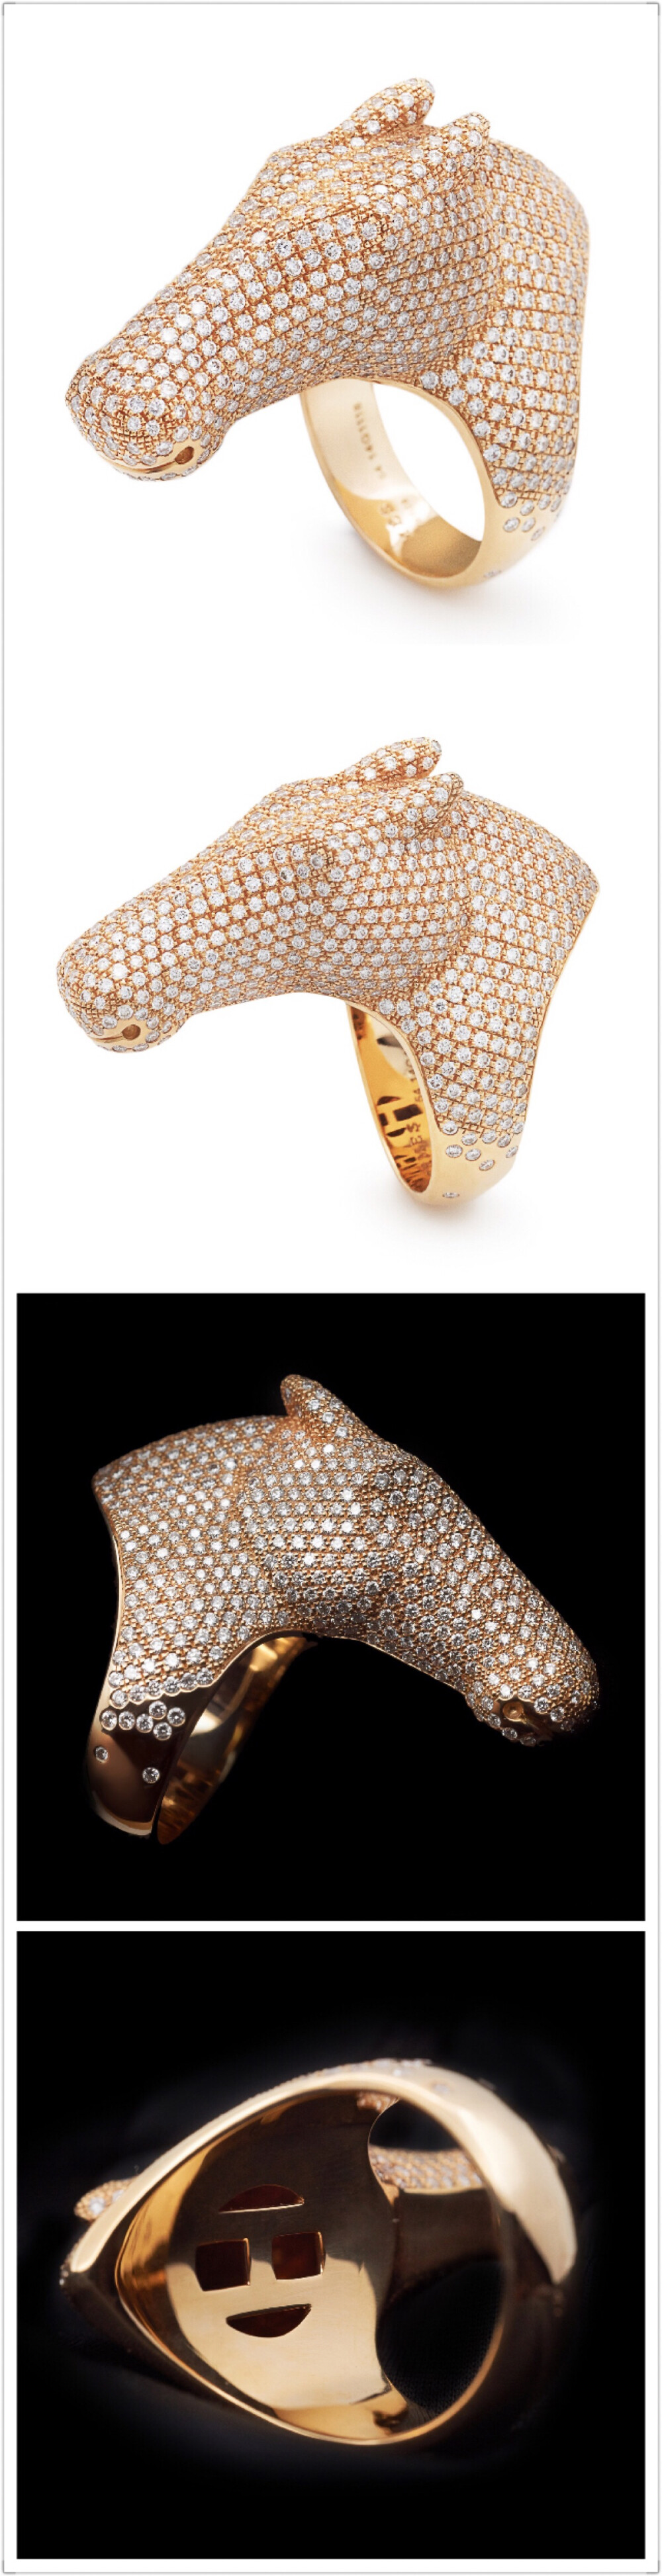 Hermès 爱马仕 Galop 戒指 采用玫瑰金材质，共镶嵌796颗明亮式切割钻石，总重4.04克拉。